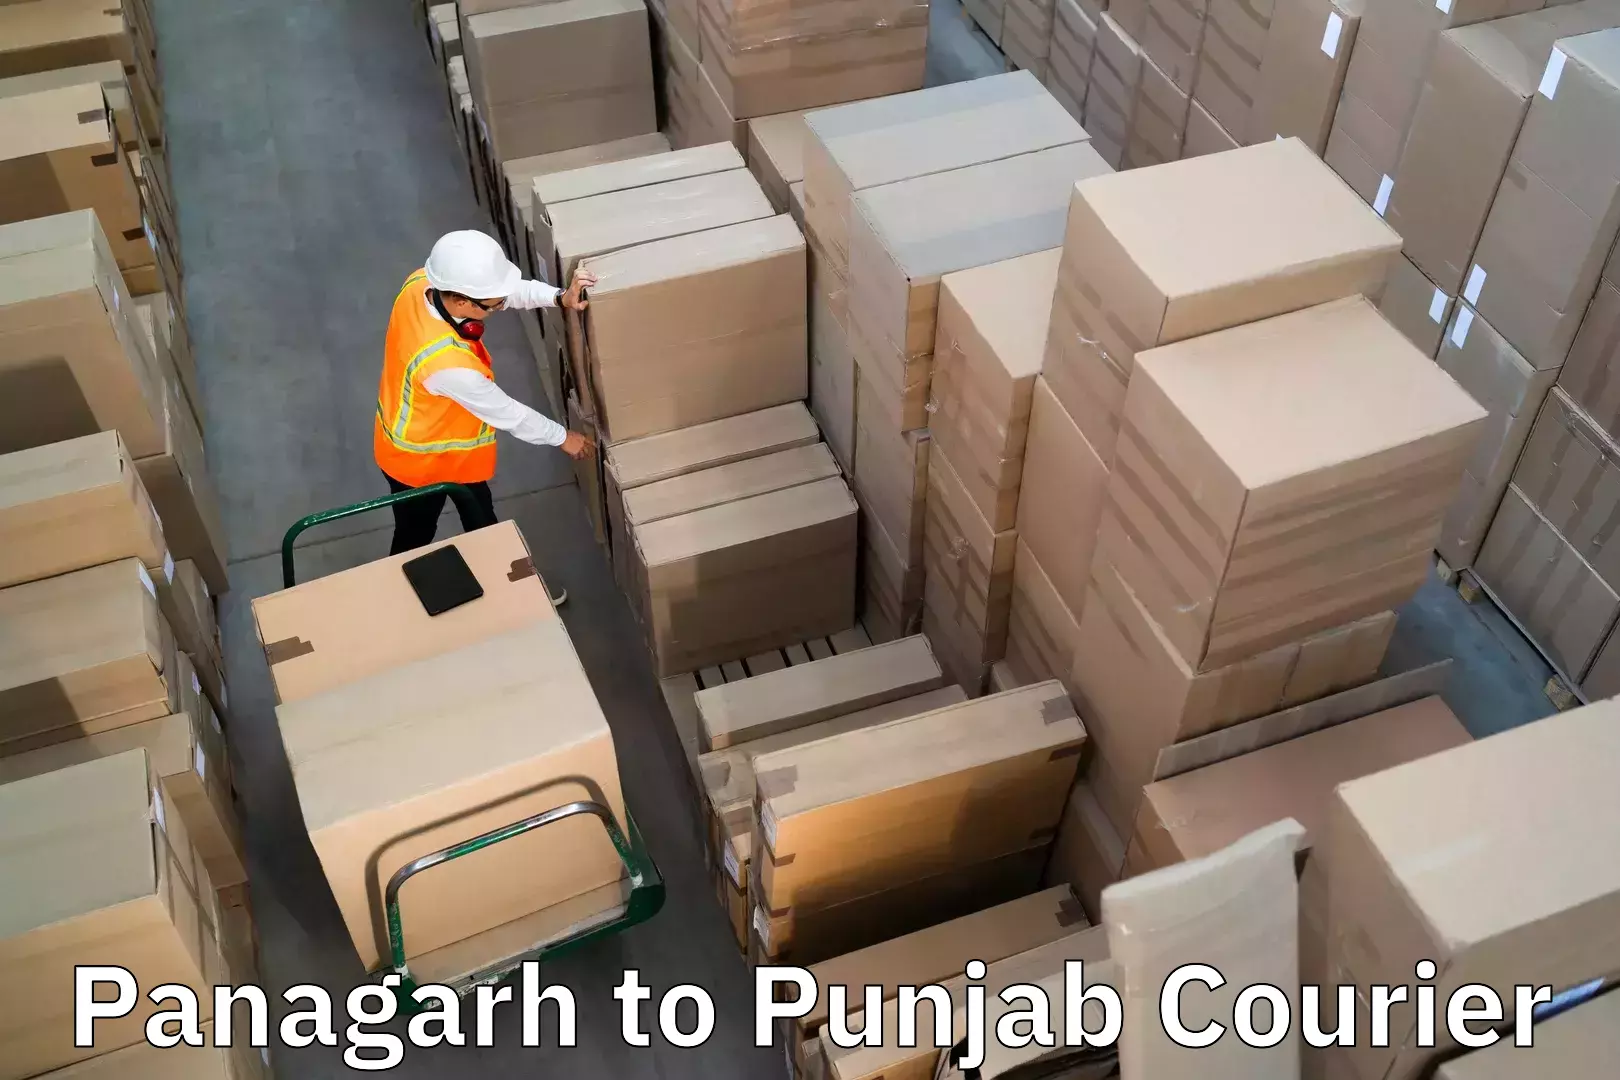 Baggage transport professionals Panagarh to Dhuri